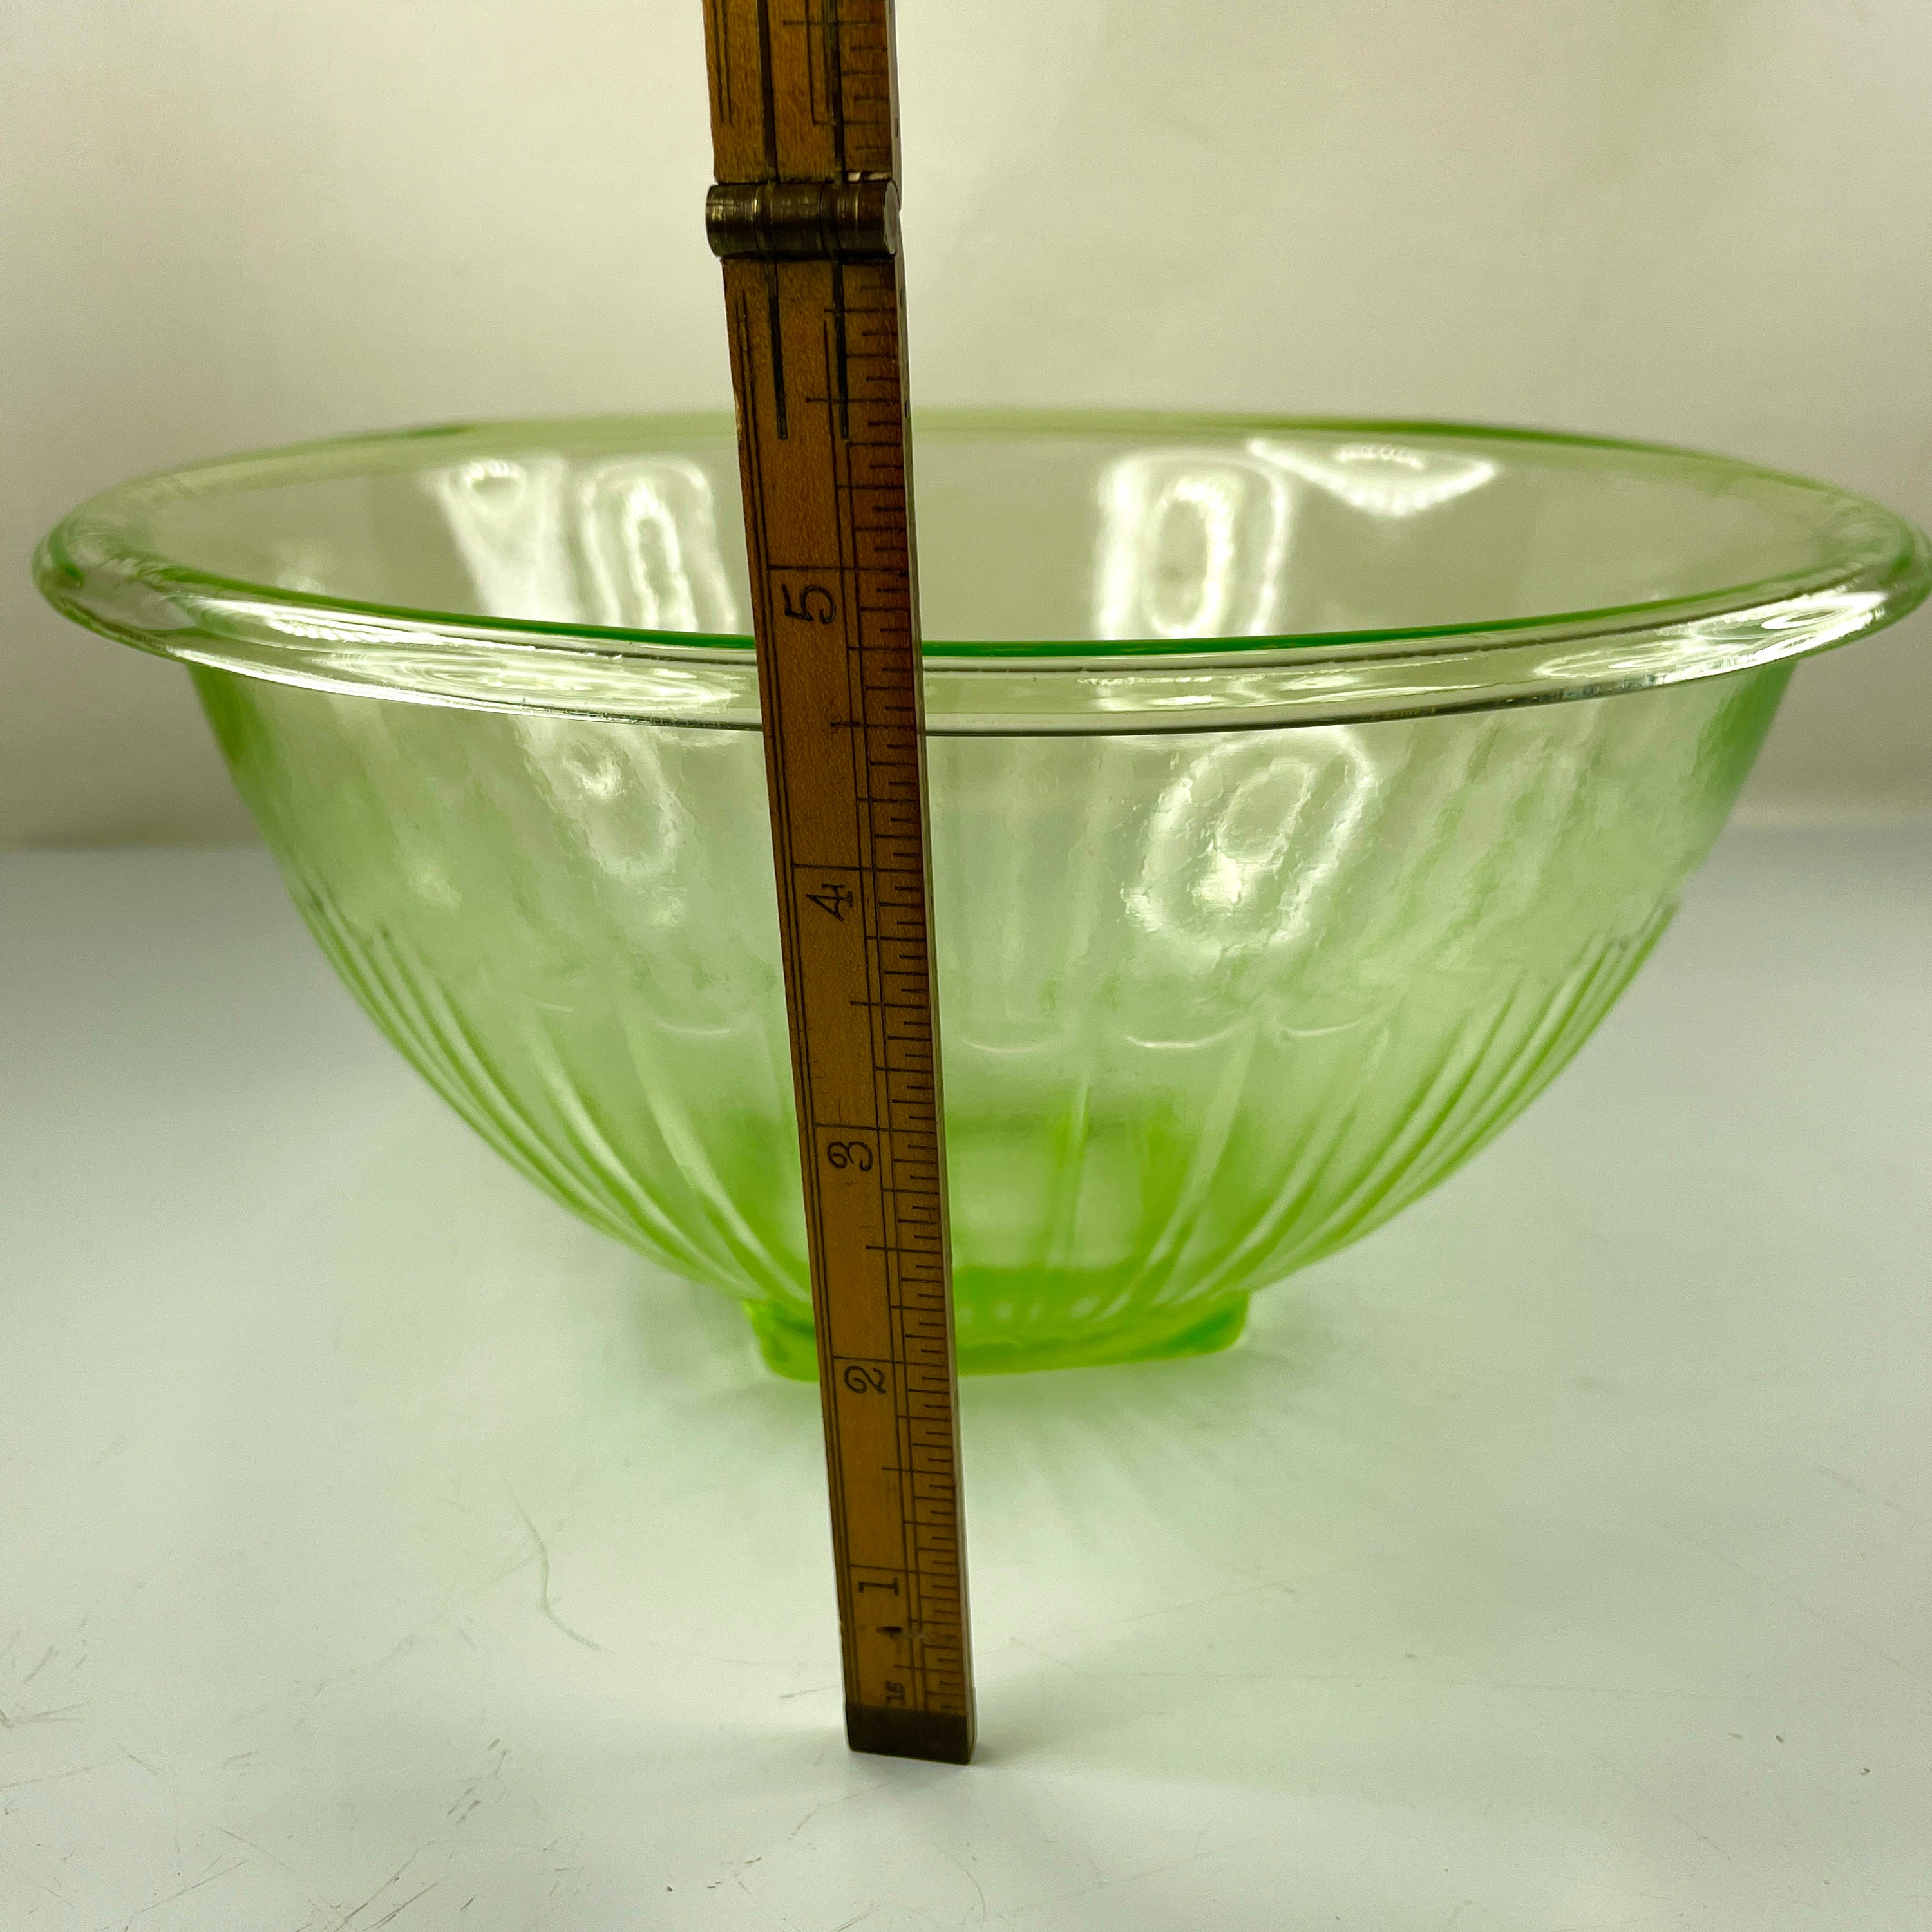 30% OFF! Glass Mixing Bowl Set, 9-Piece